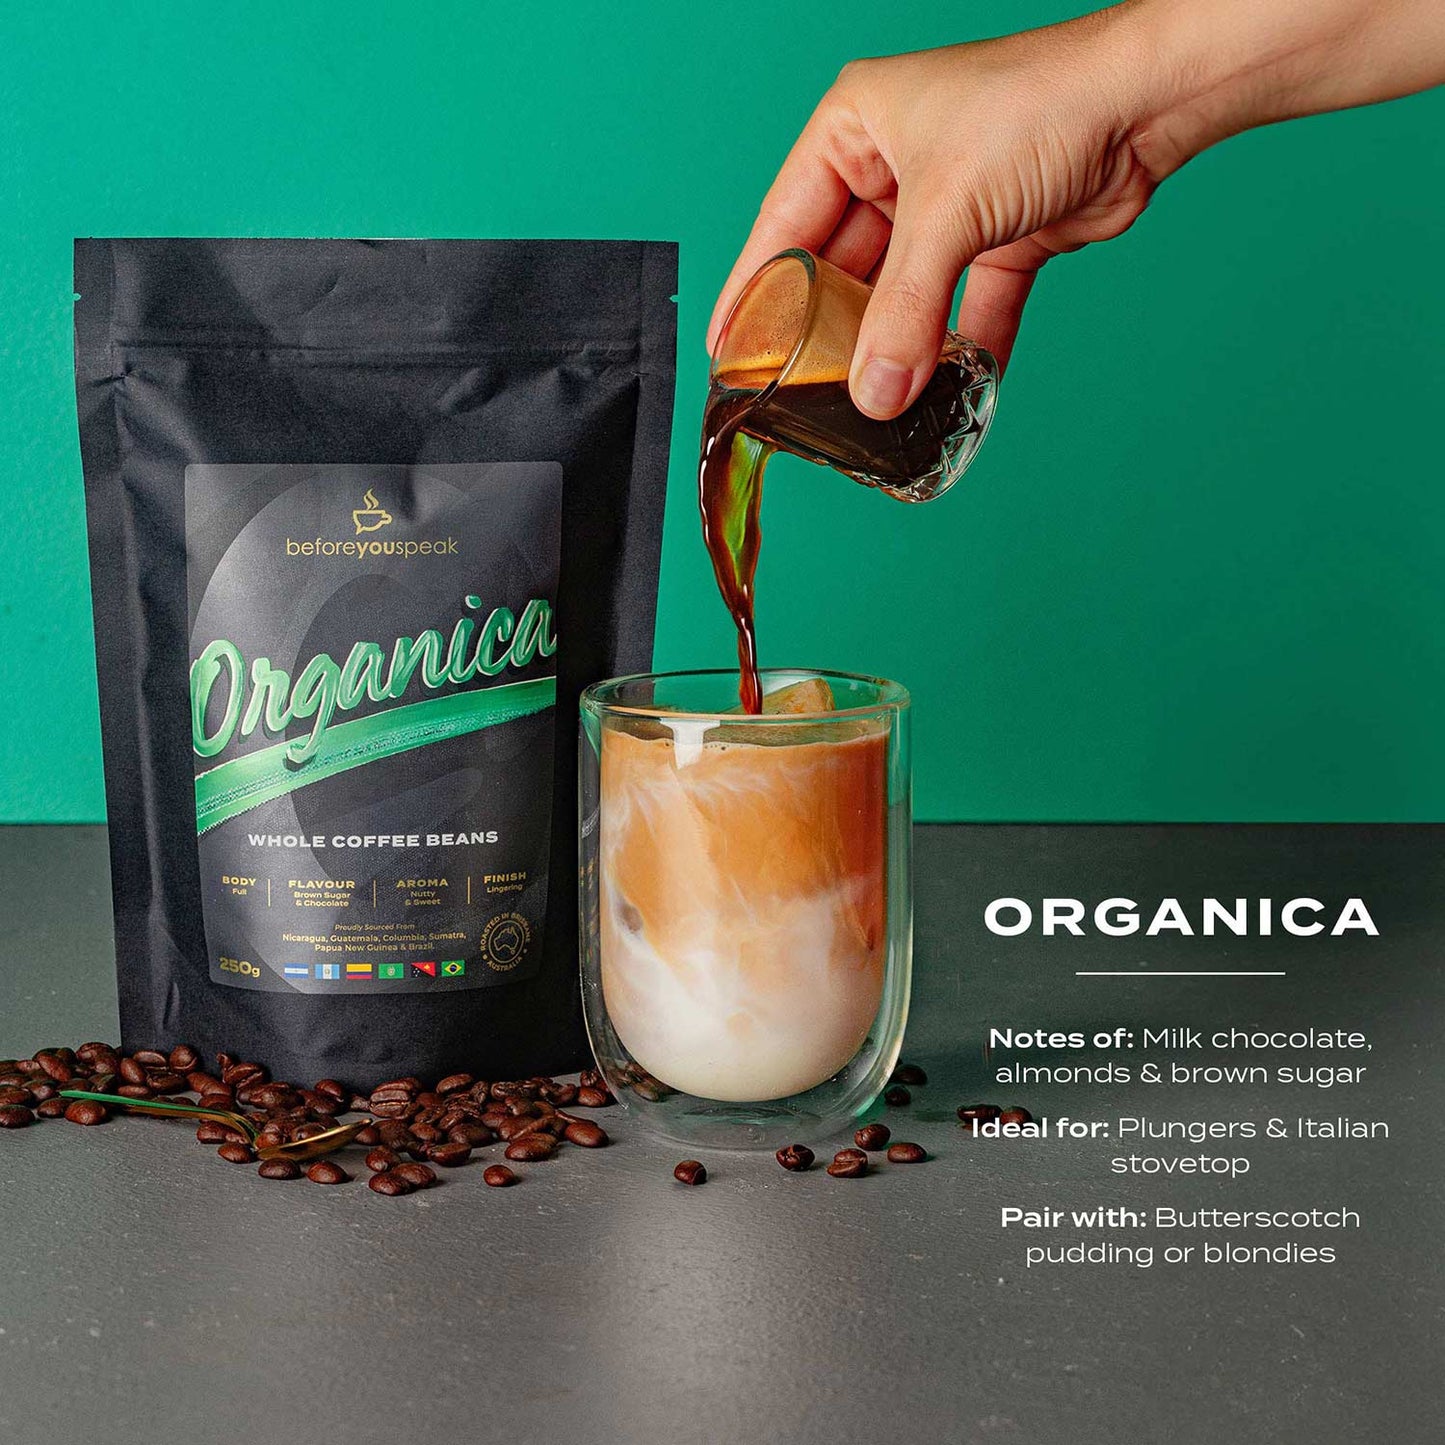 Organica Whole Coffee Beans